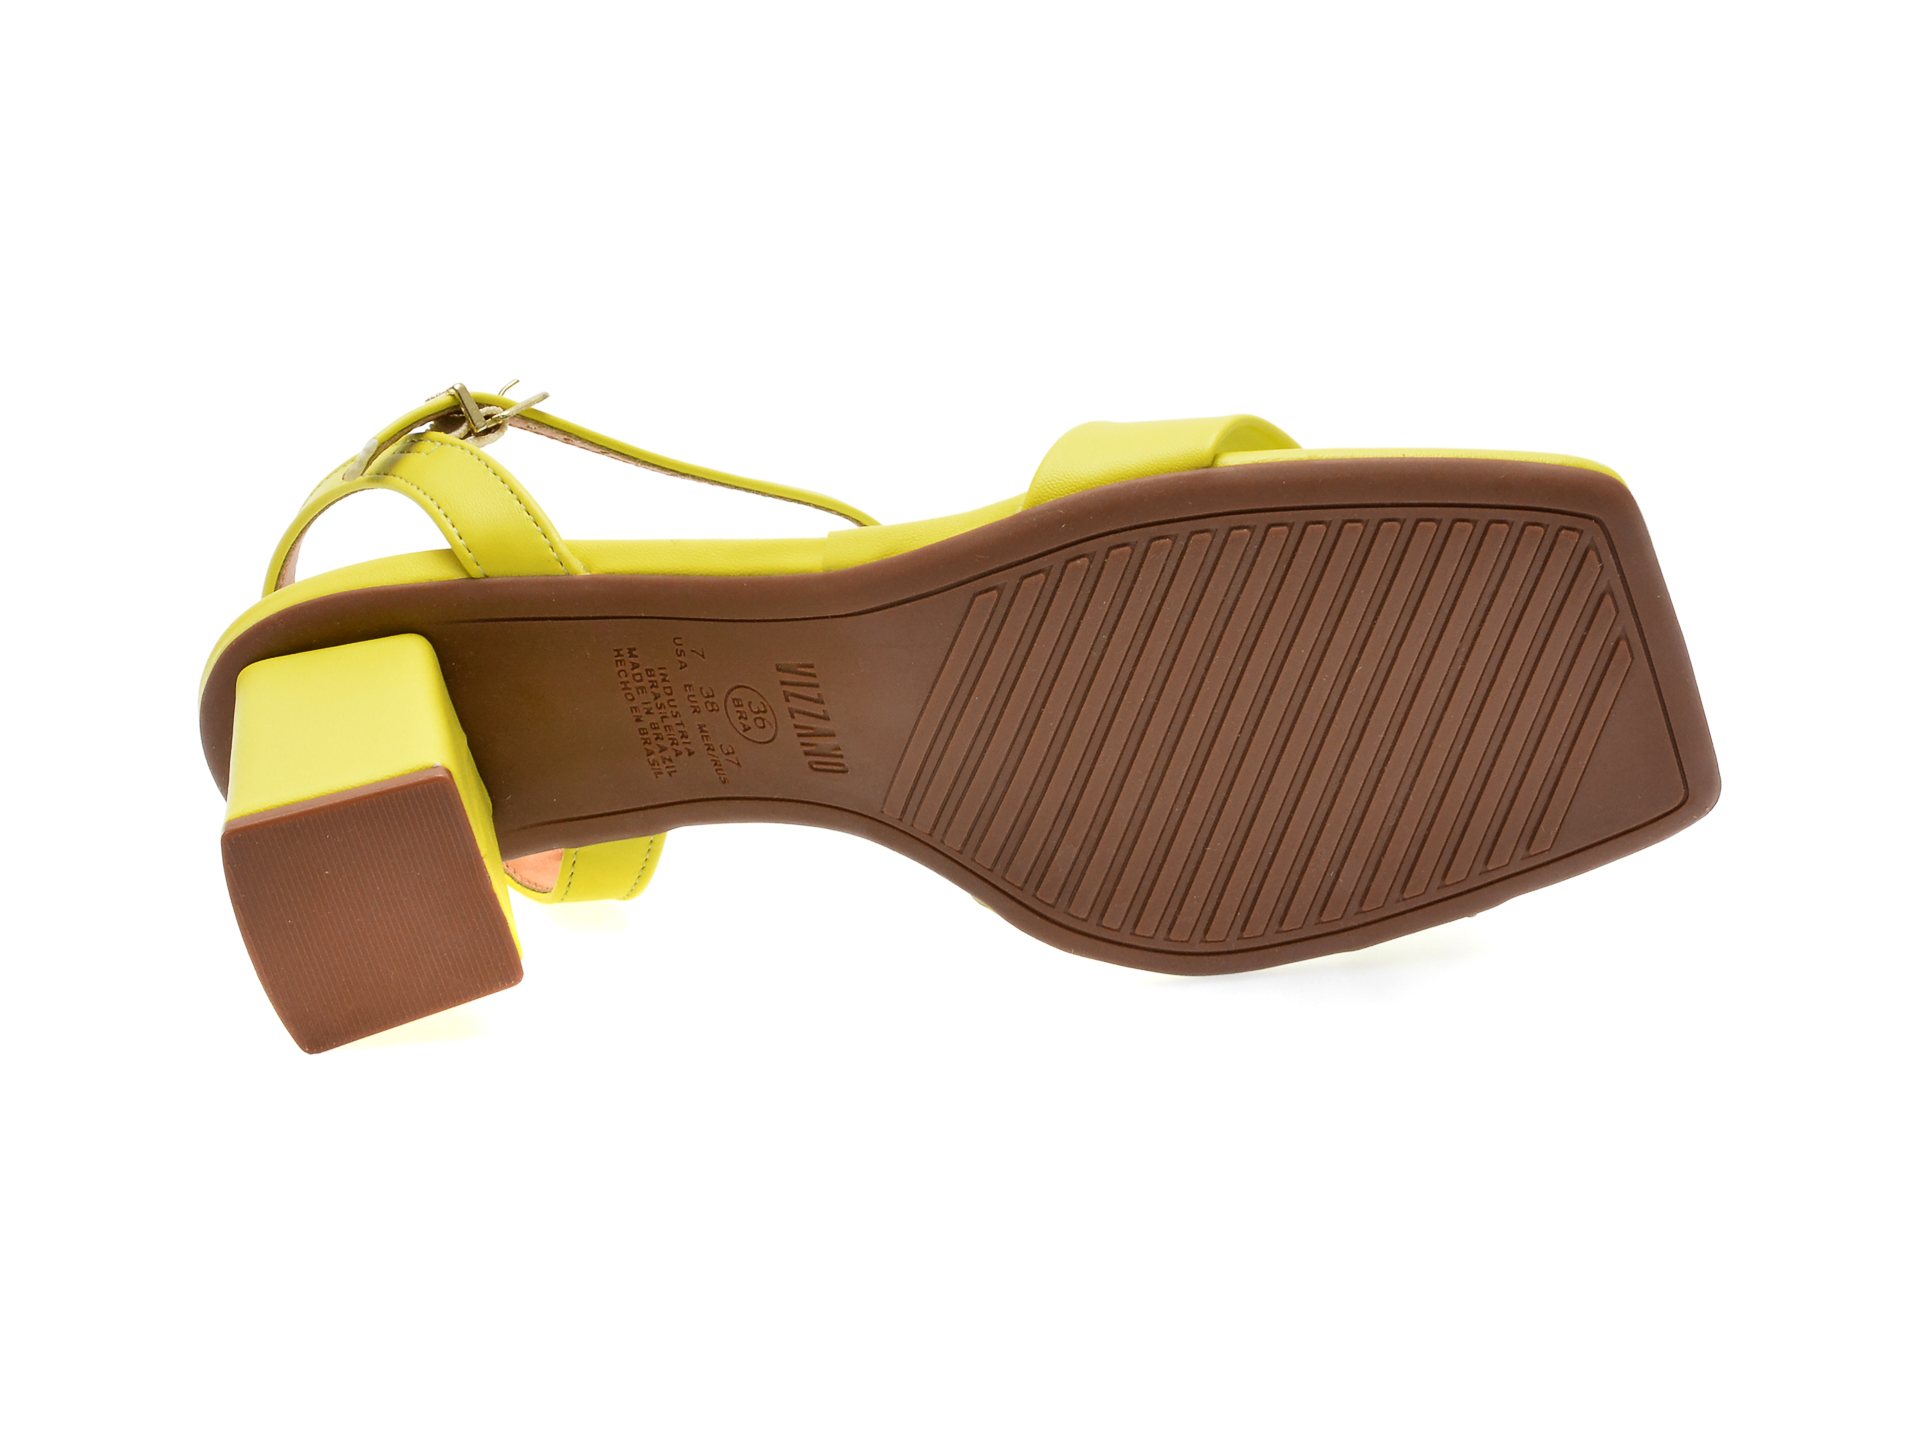 Sandale VIZZANO galbene, 6455101, din piele ecologica